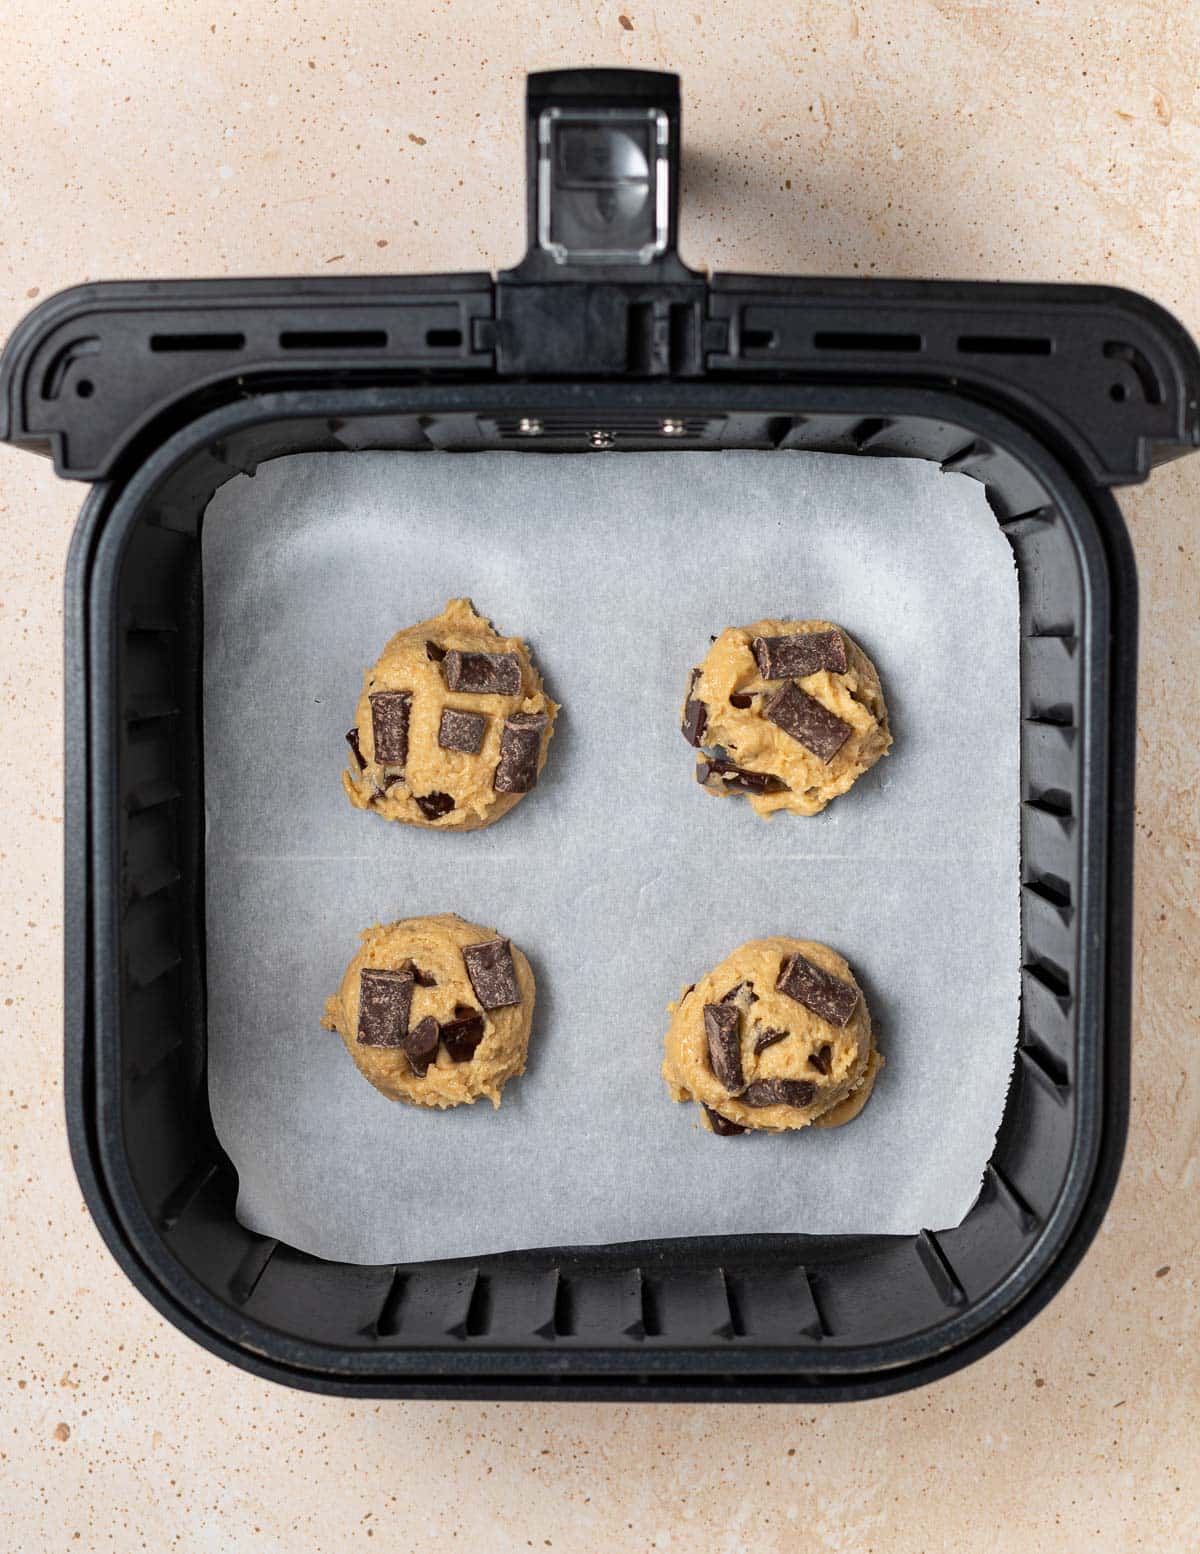 4 balls of cookie dough in an air fryer basket